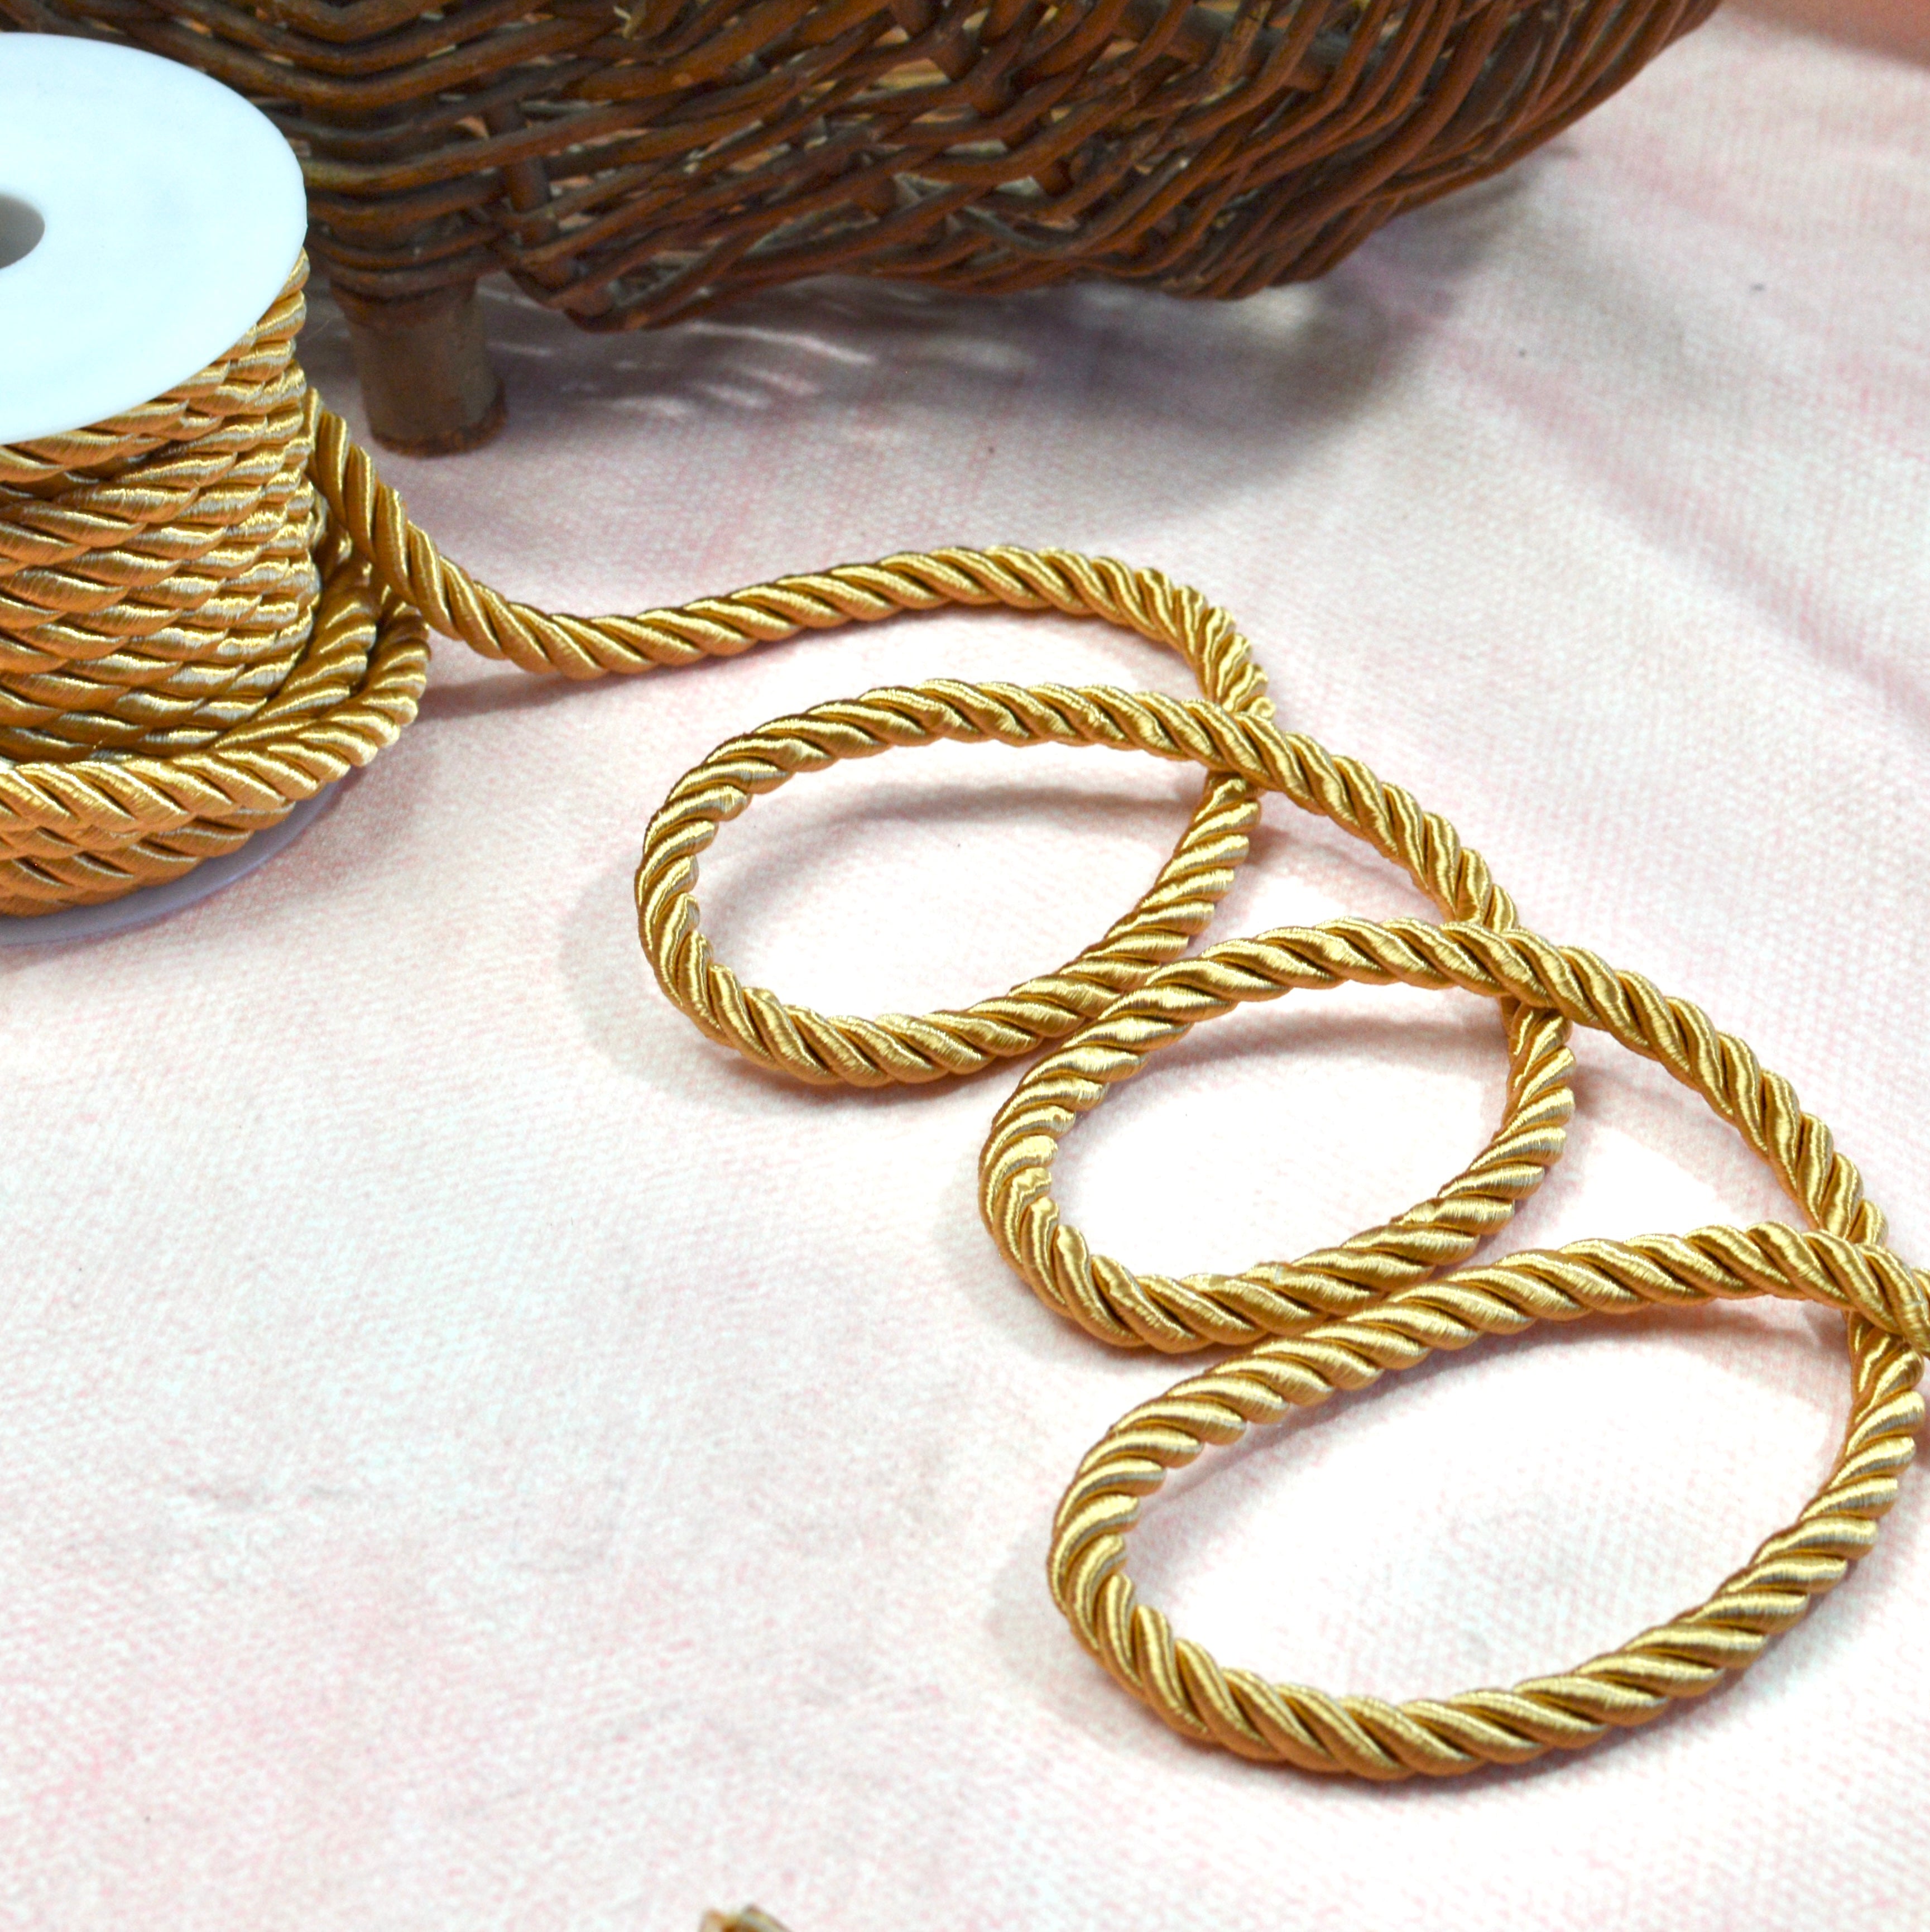 Hoodiekordel 10 mm dunkel gold glänzend Fabric poshpinks